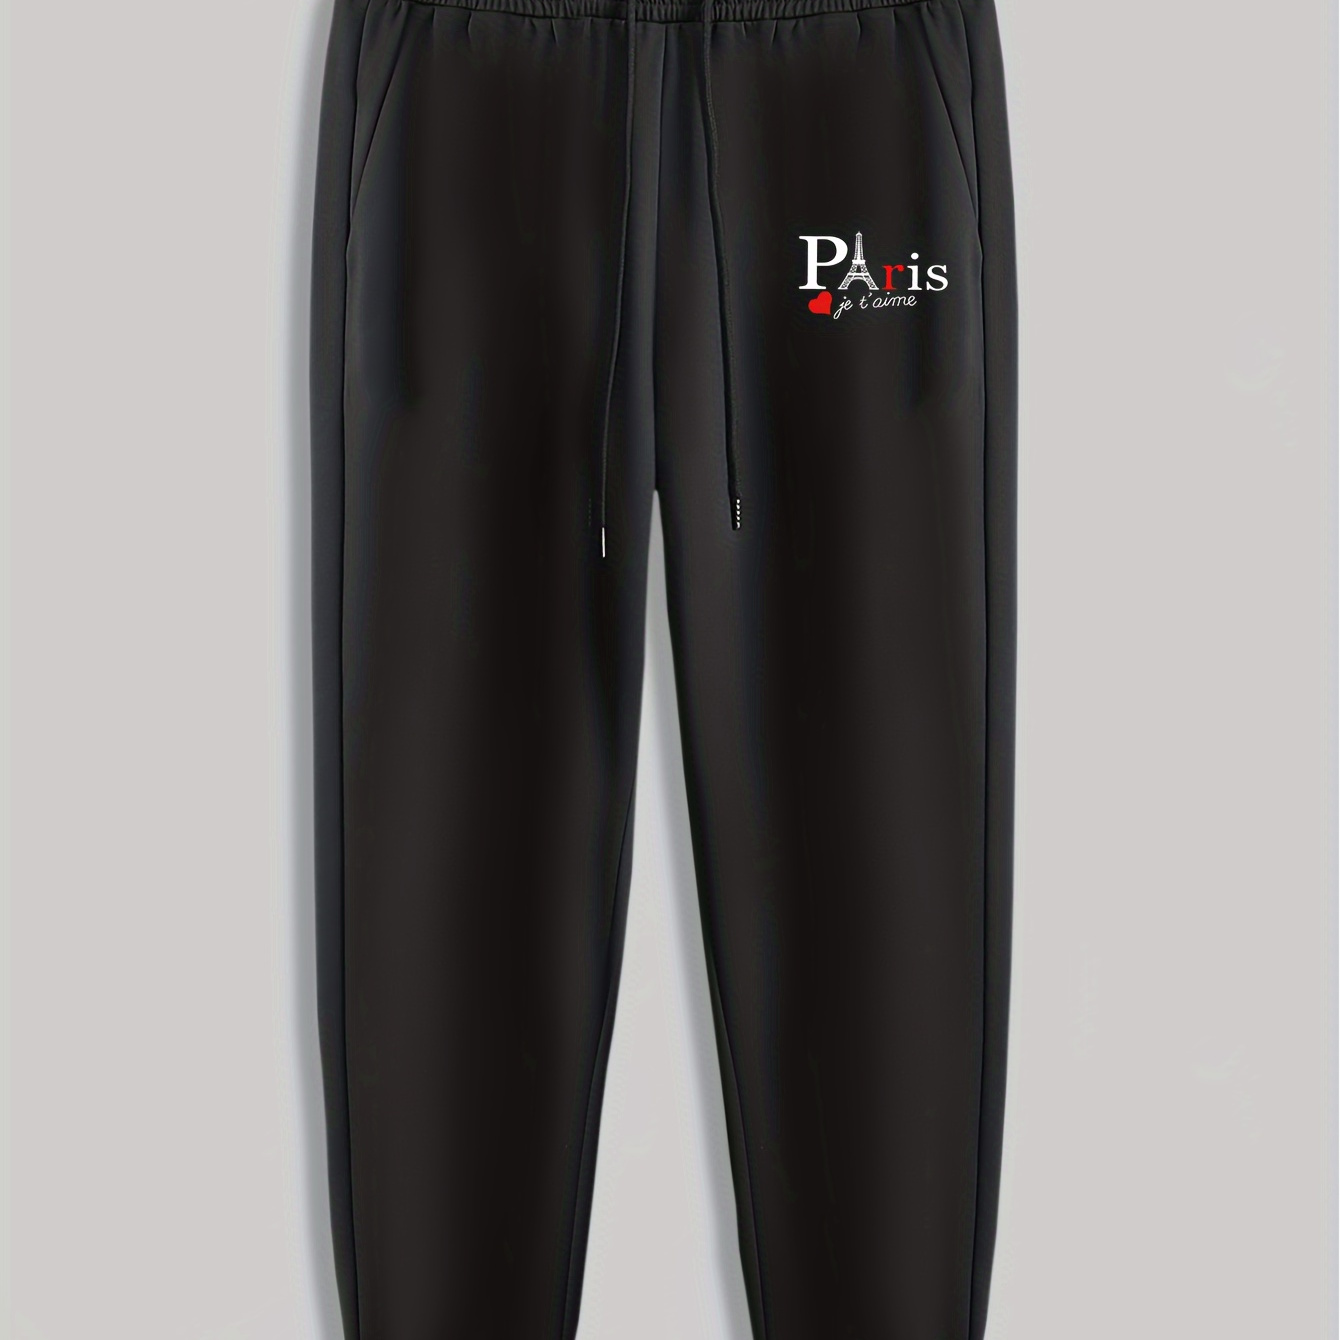 

Paris Tower Print Men's Pants Drawstring Sweatpants Loose Casual Trousers For Spring Autumn Running Jogging